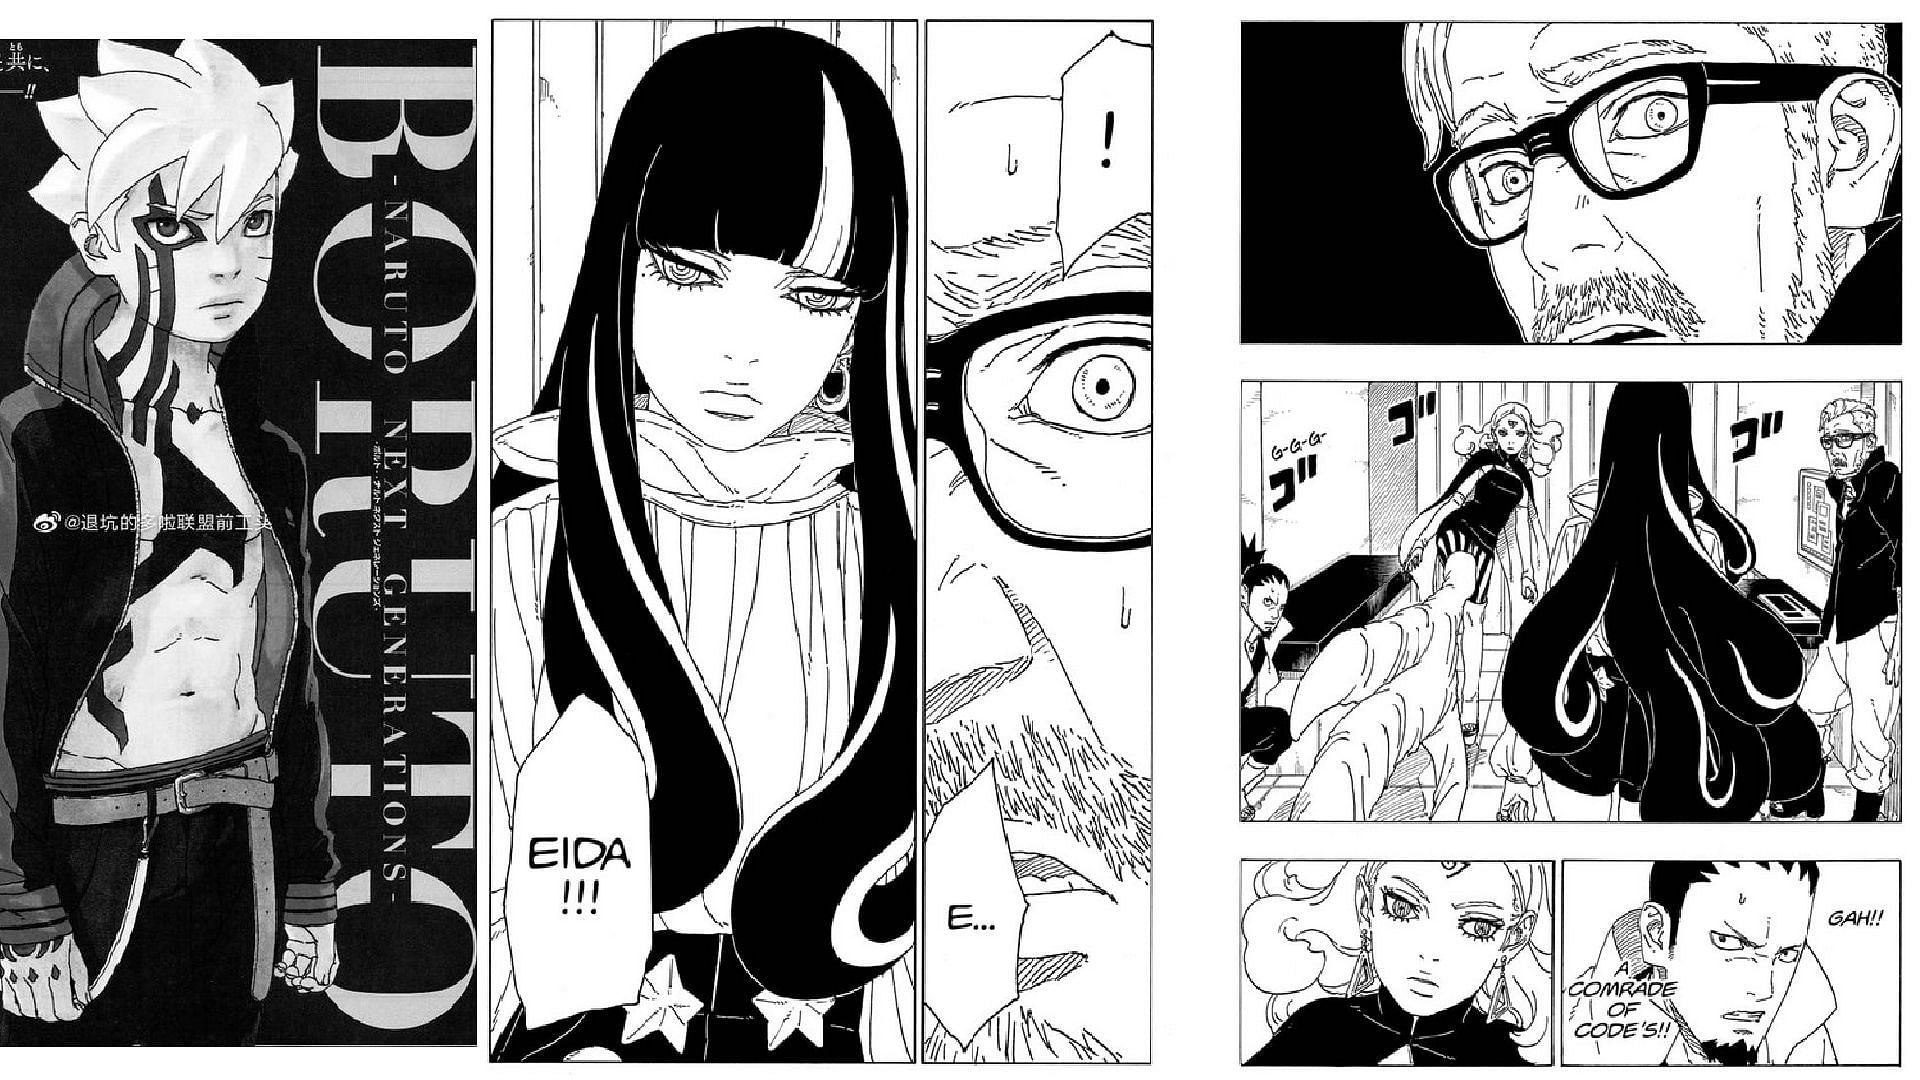 Boruto chapter 68 panels (Images via Shueisha)